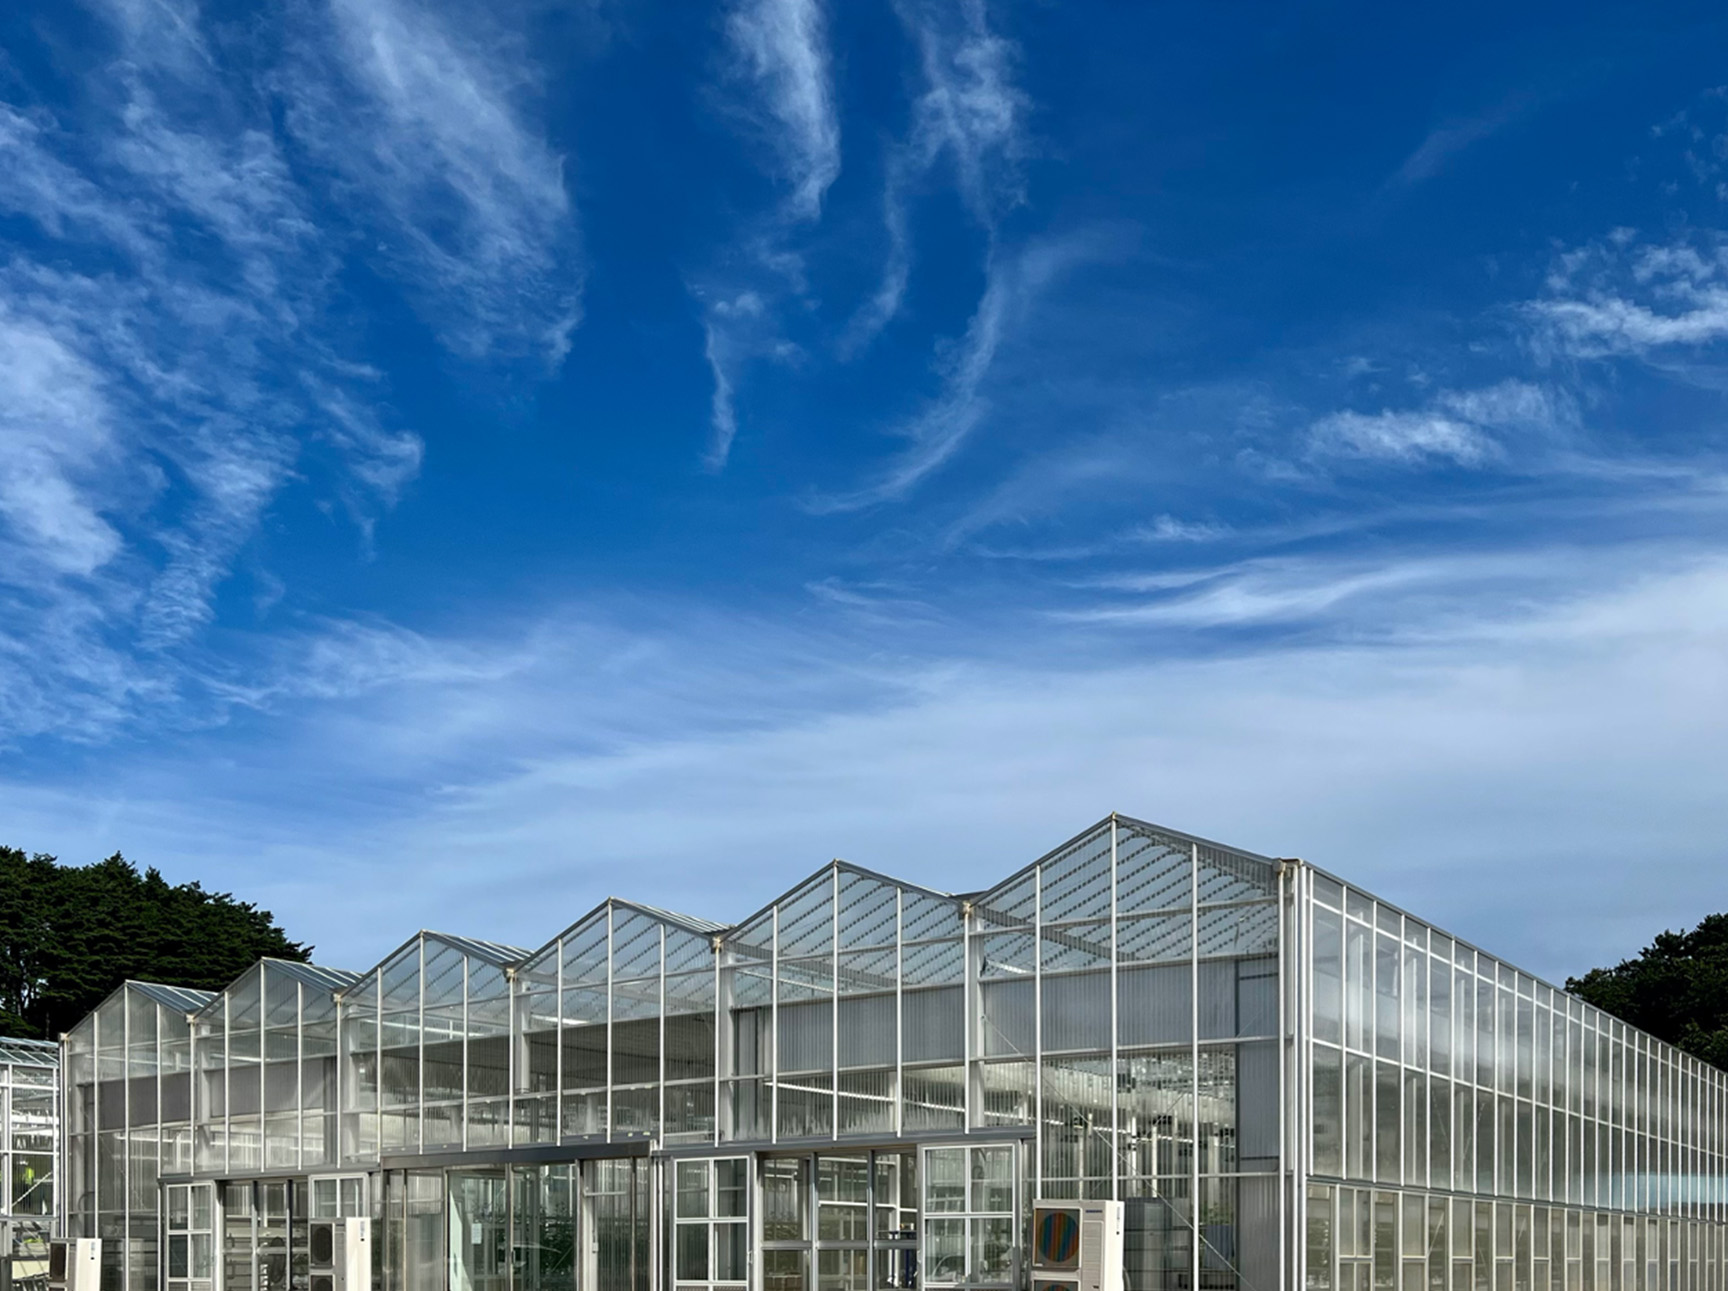 The exterior of a smart farm greenhouse